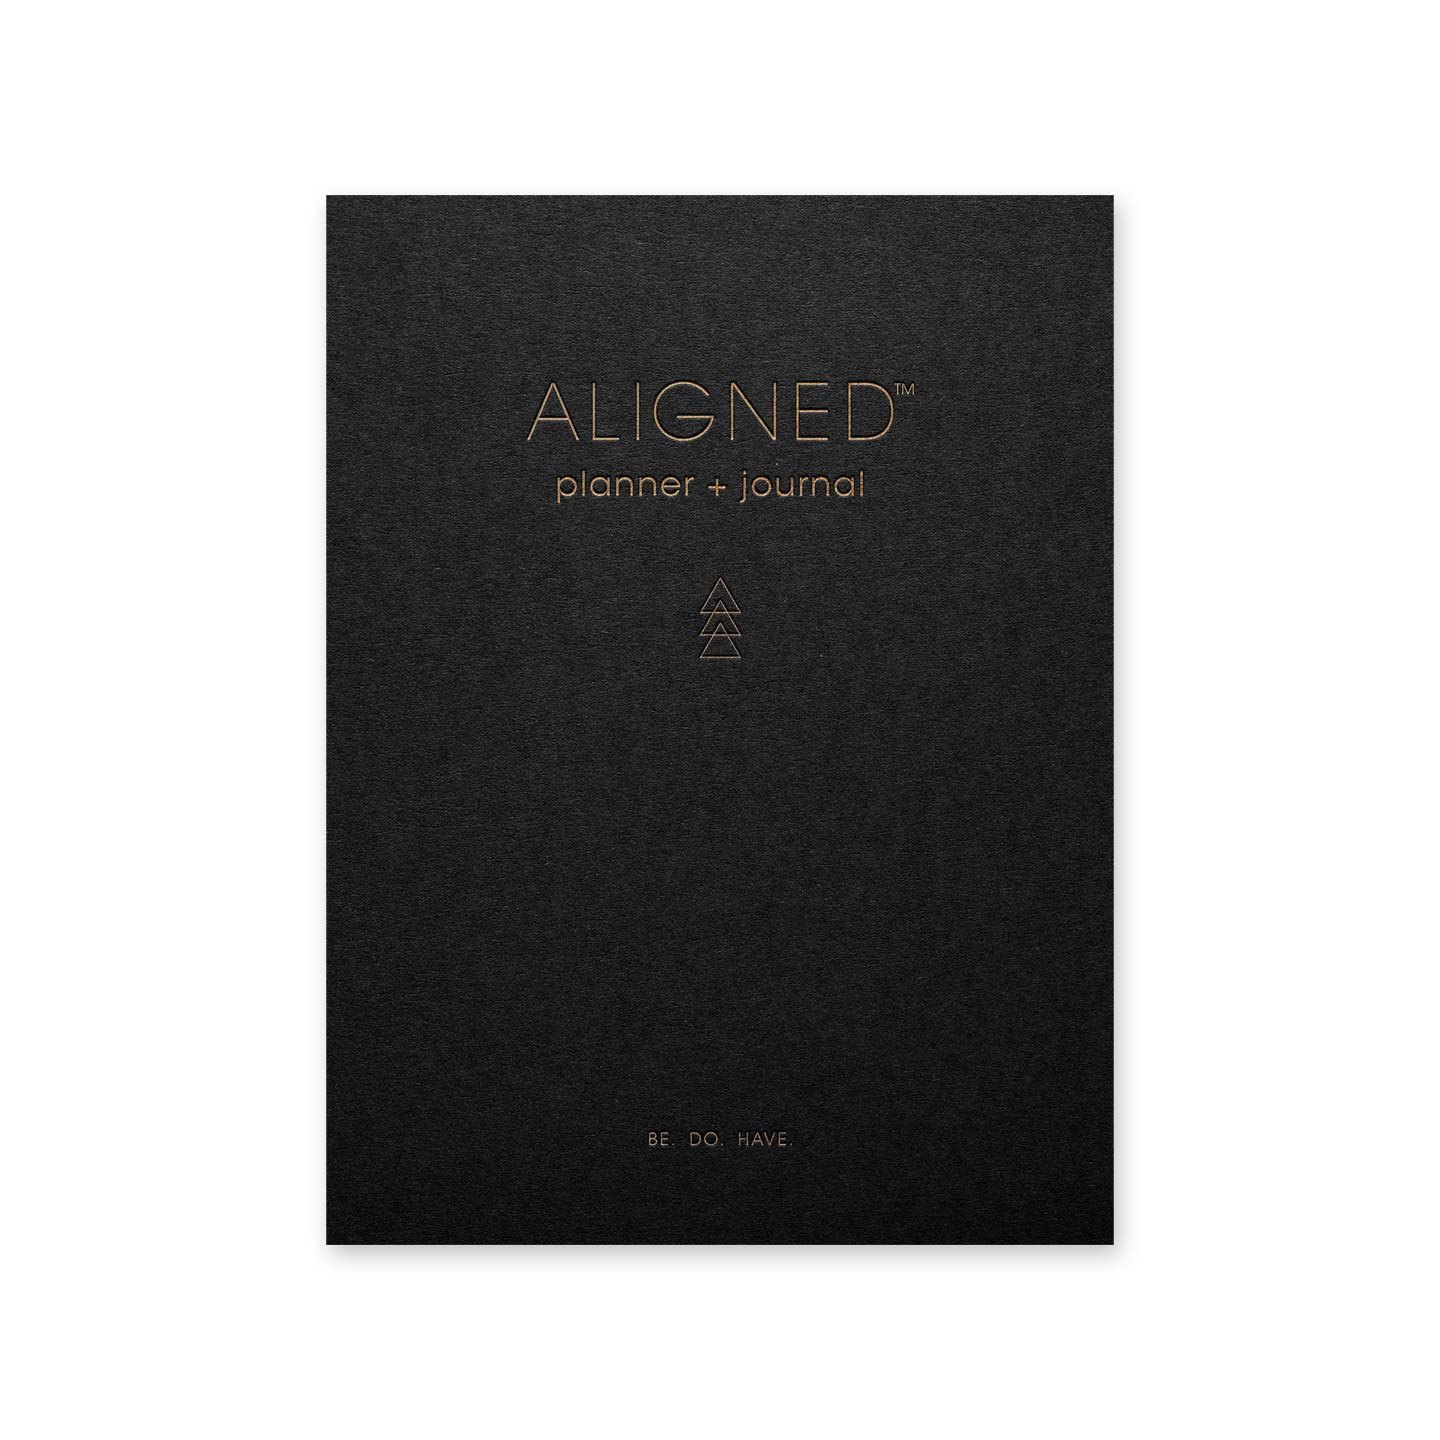 Digital (PDF) Aligned Planner+Journal